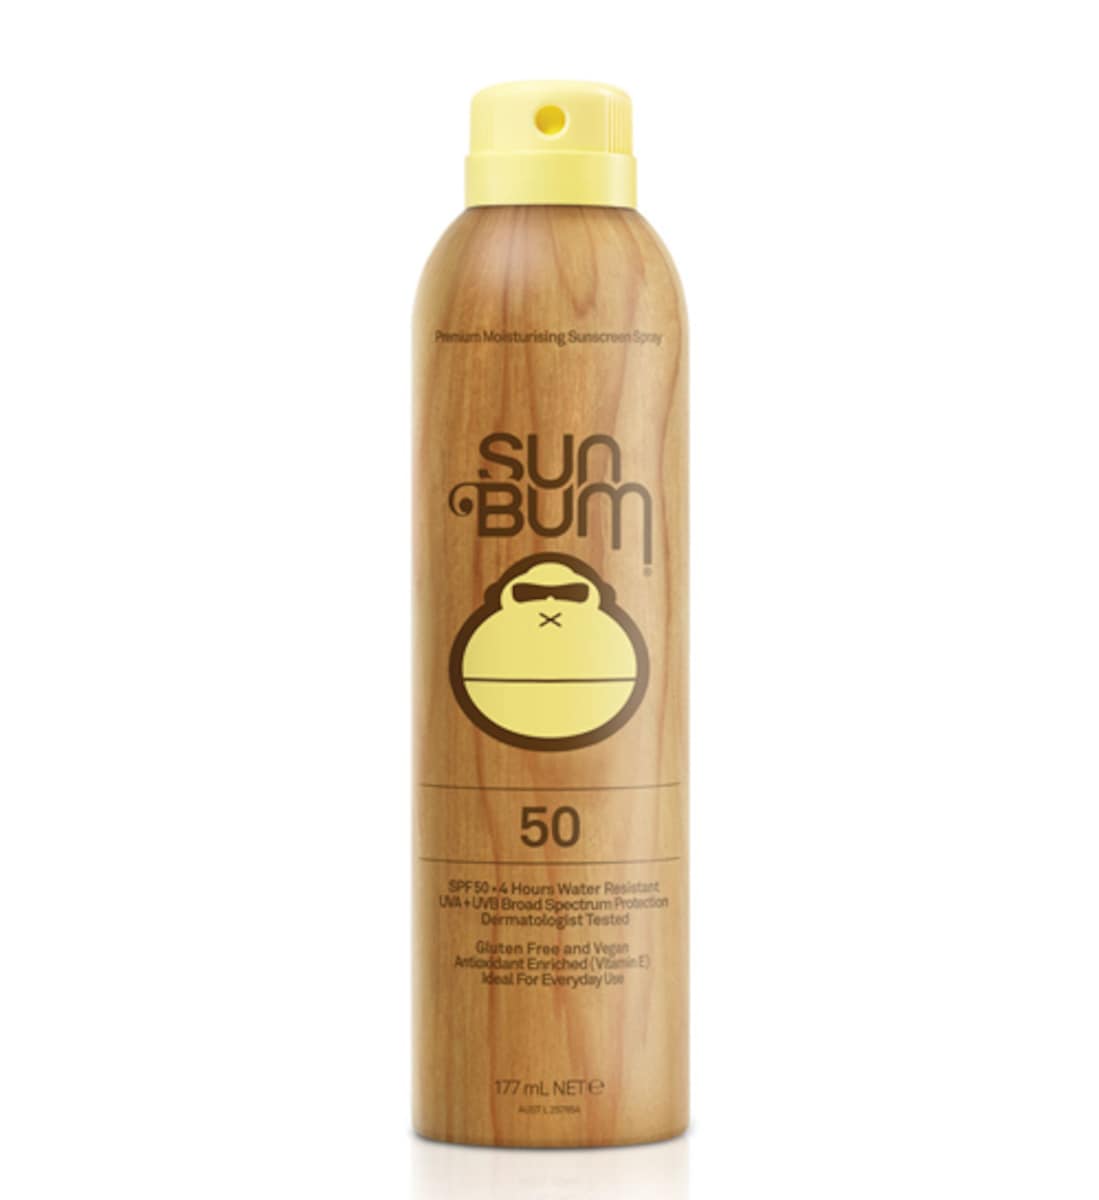 Sun Bum Original Sunscreen Spray SPF50 177ml